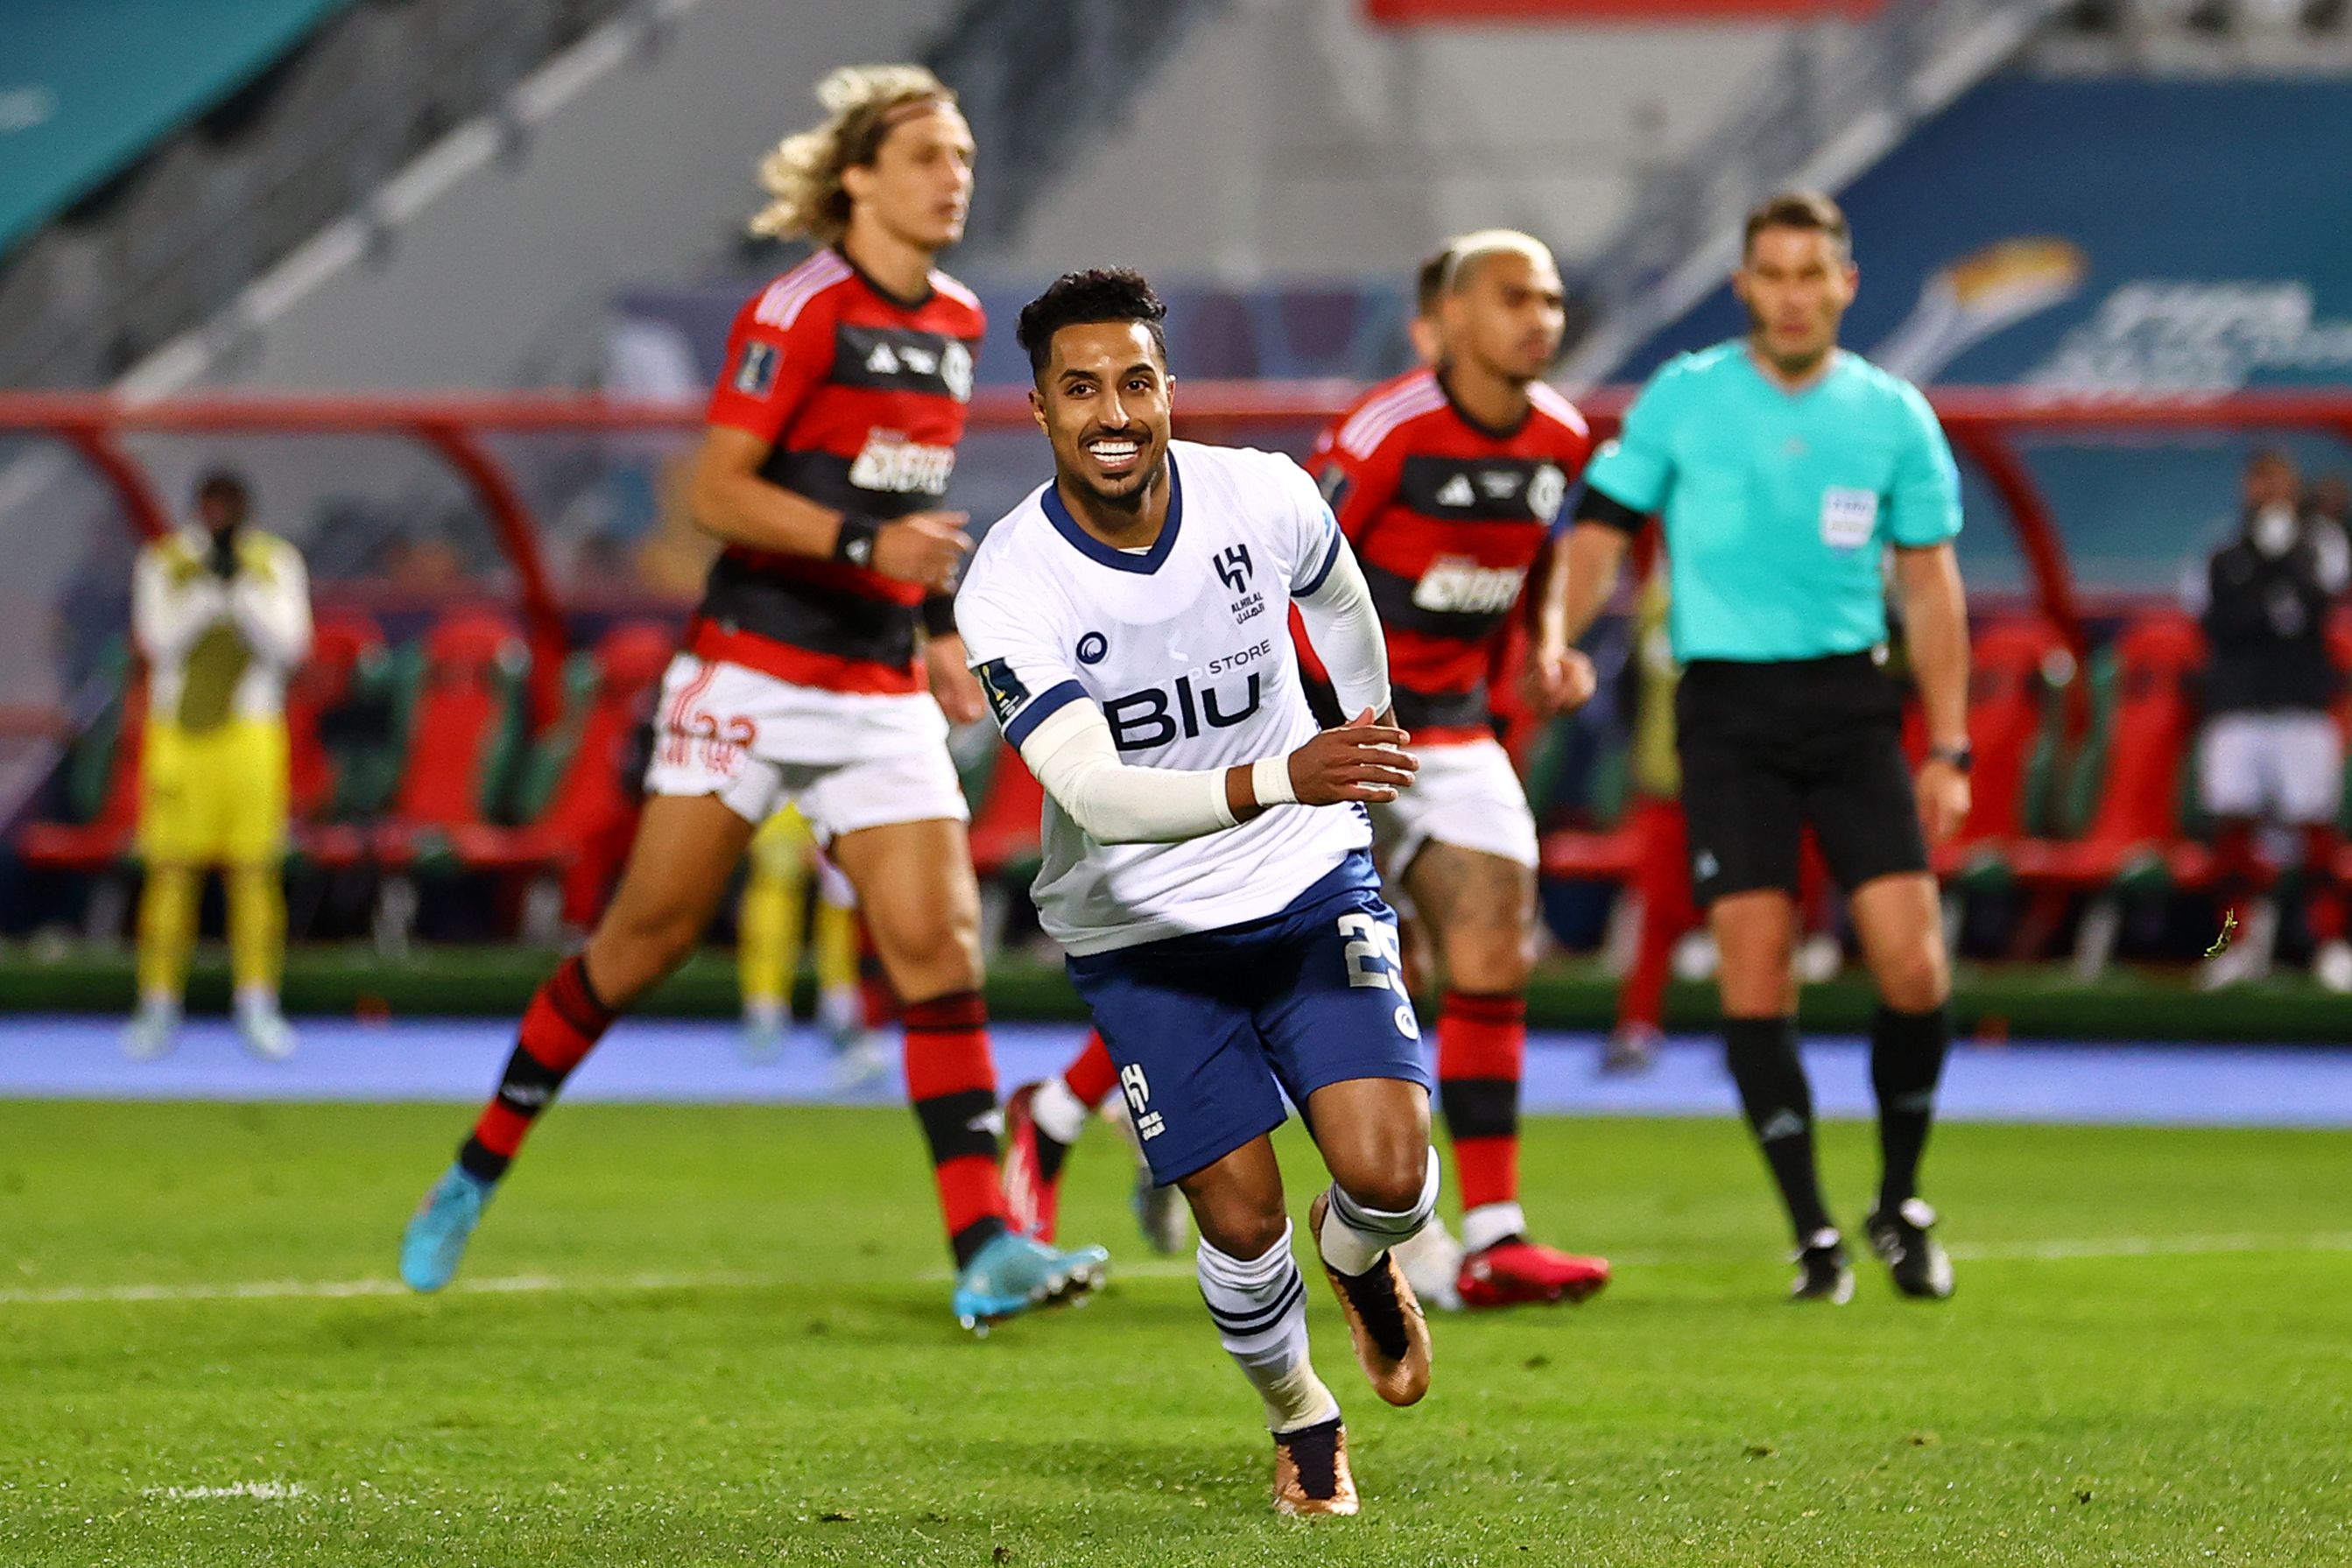 Al Hilal shock Flamengo with 3-2 win in Club World Cup semifinal | CNN